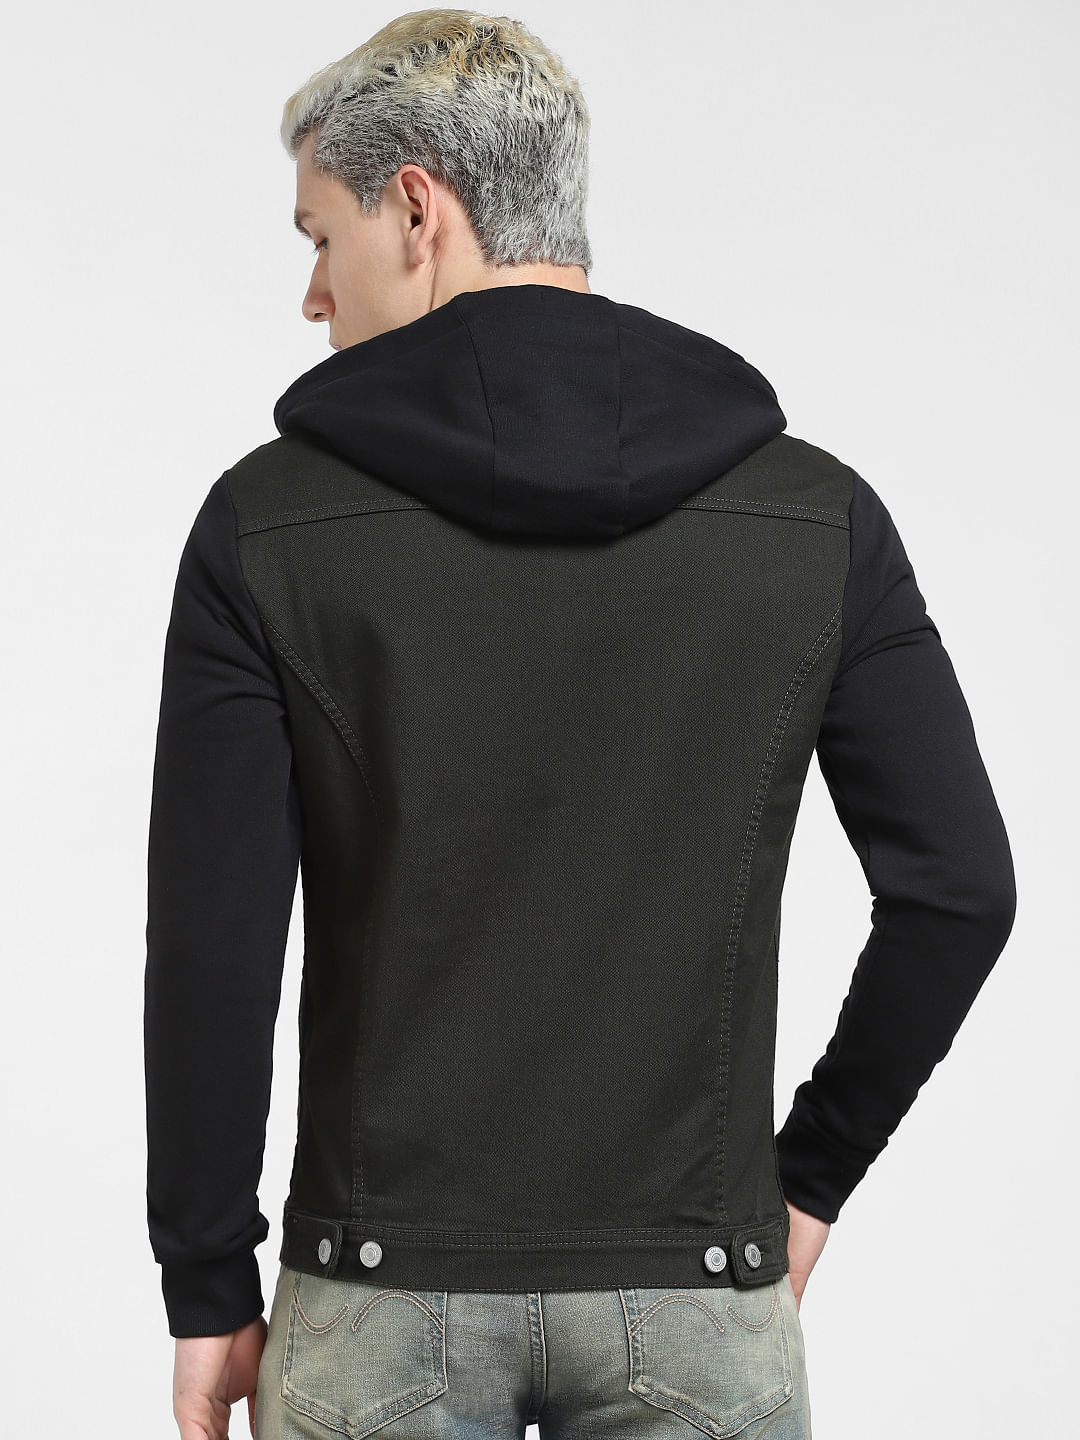 Armani Exchange - Denim jacket and hoodie: the classic... | Facebook